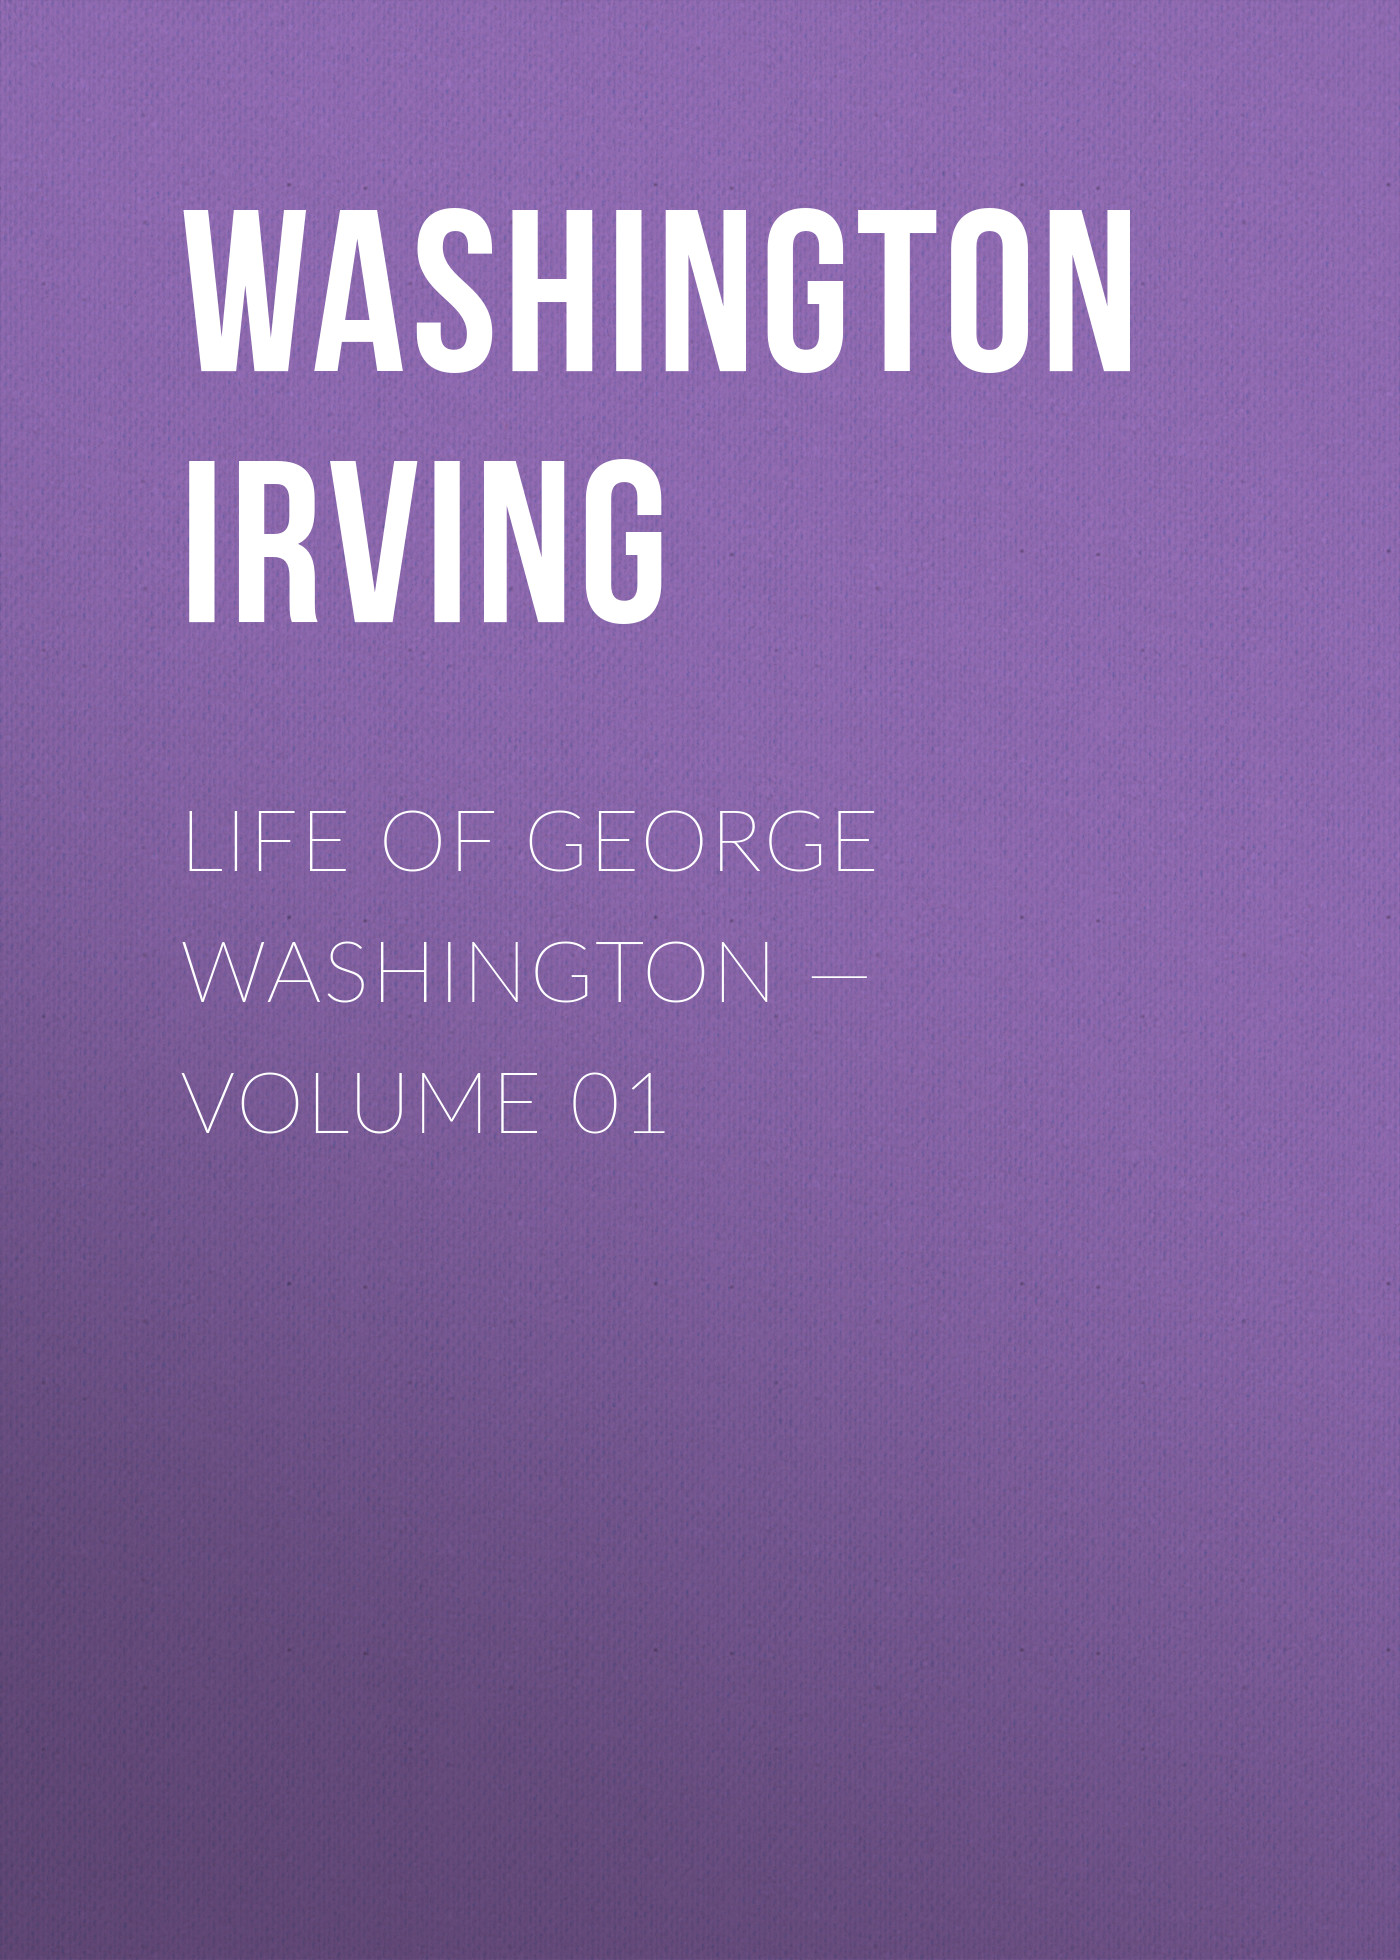 Life of George Washington— Volume 01